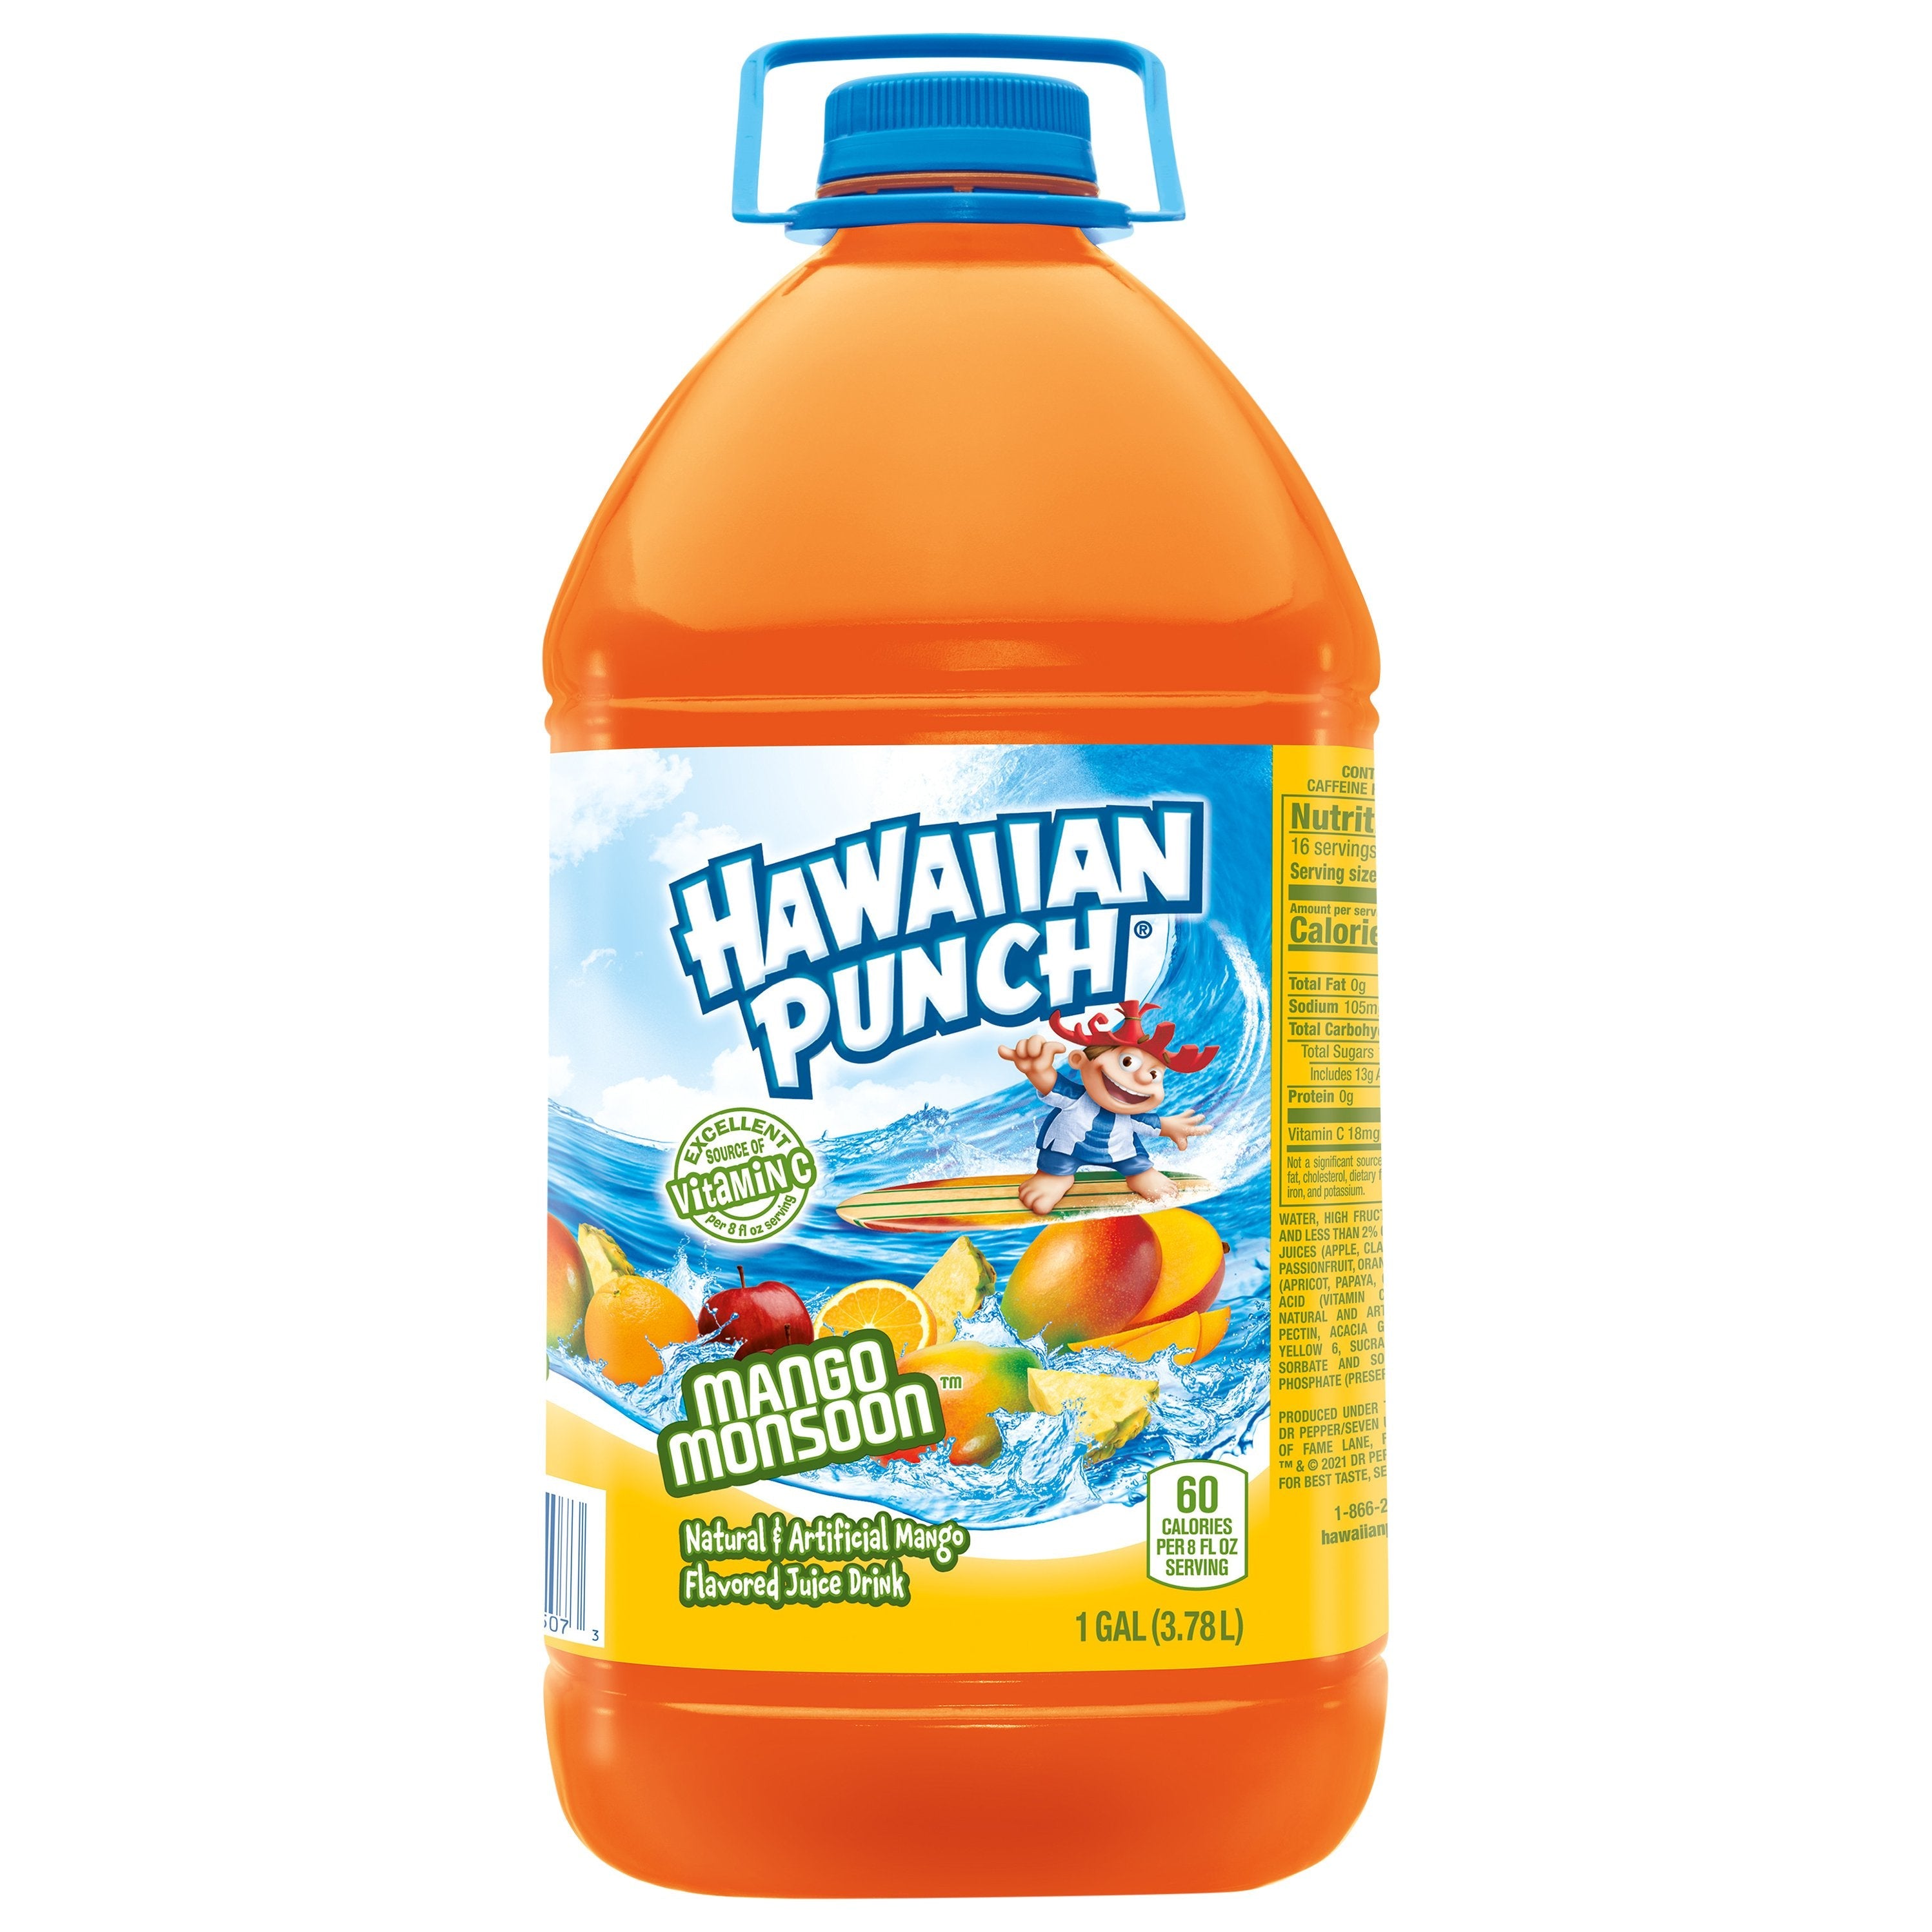 Hawaiian Punch Flavored Juice Drink, Fruit Juicy Red 64 fl oz